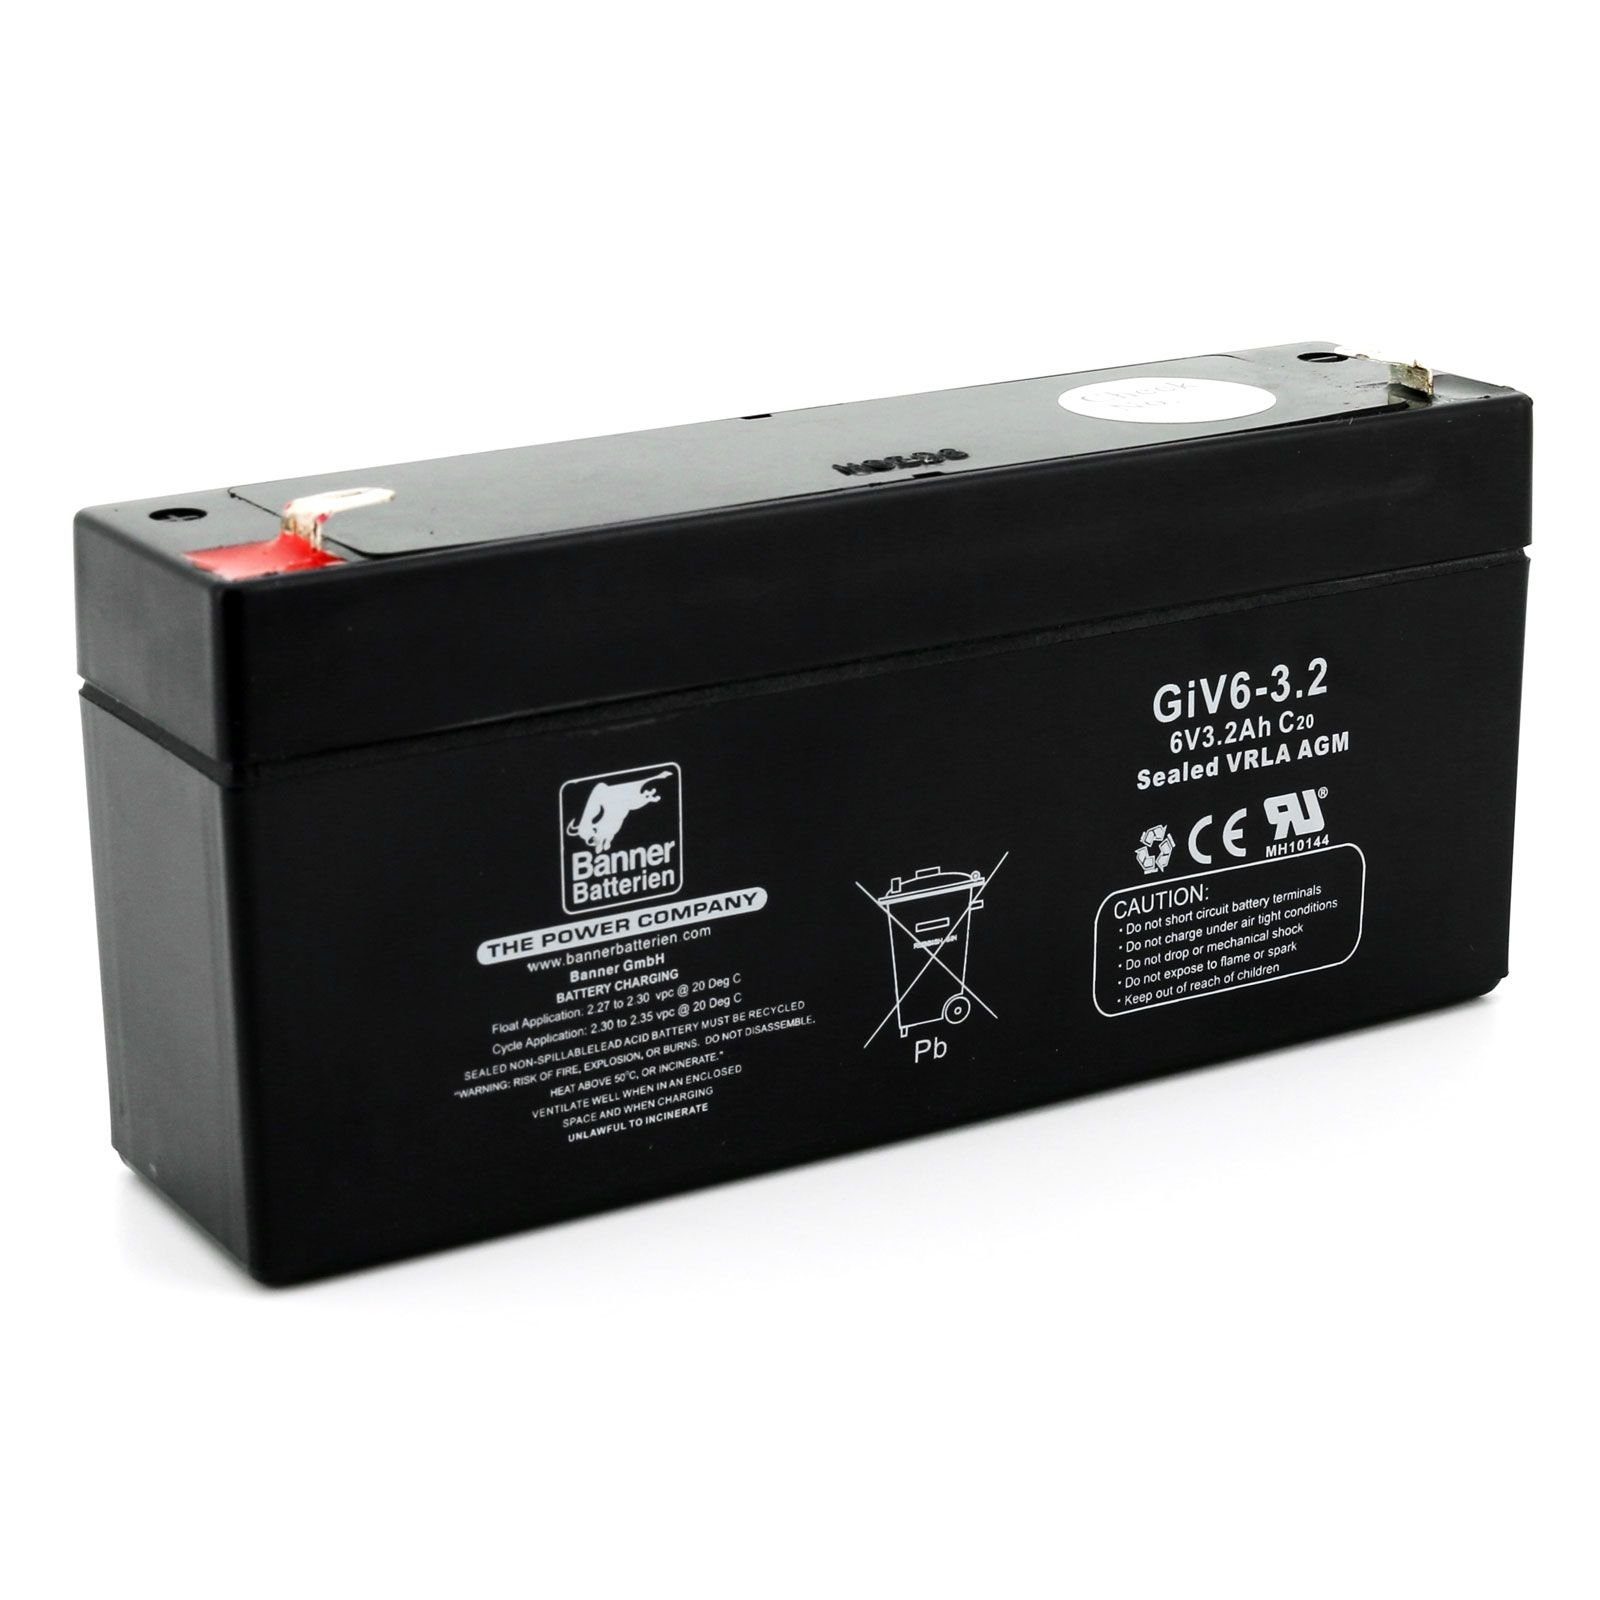 Banner Batterien Batterie Stand by Bull 6 Volt 3,2 Ah GIV 06-3.2 Batterie, 6 Volt 3,2 Ah